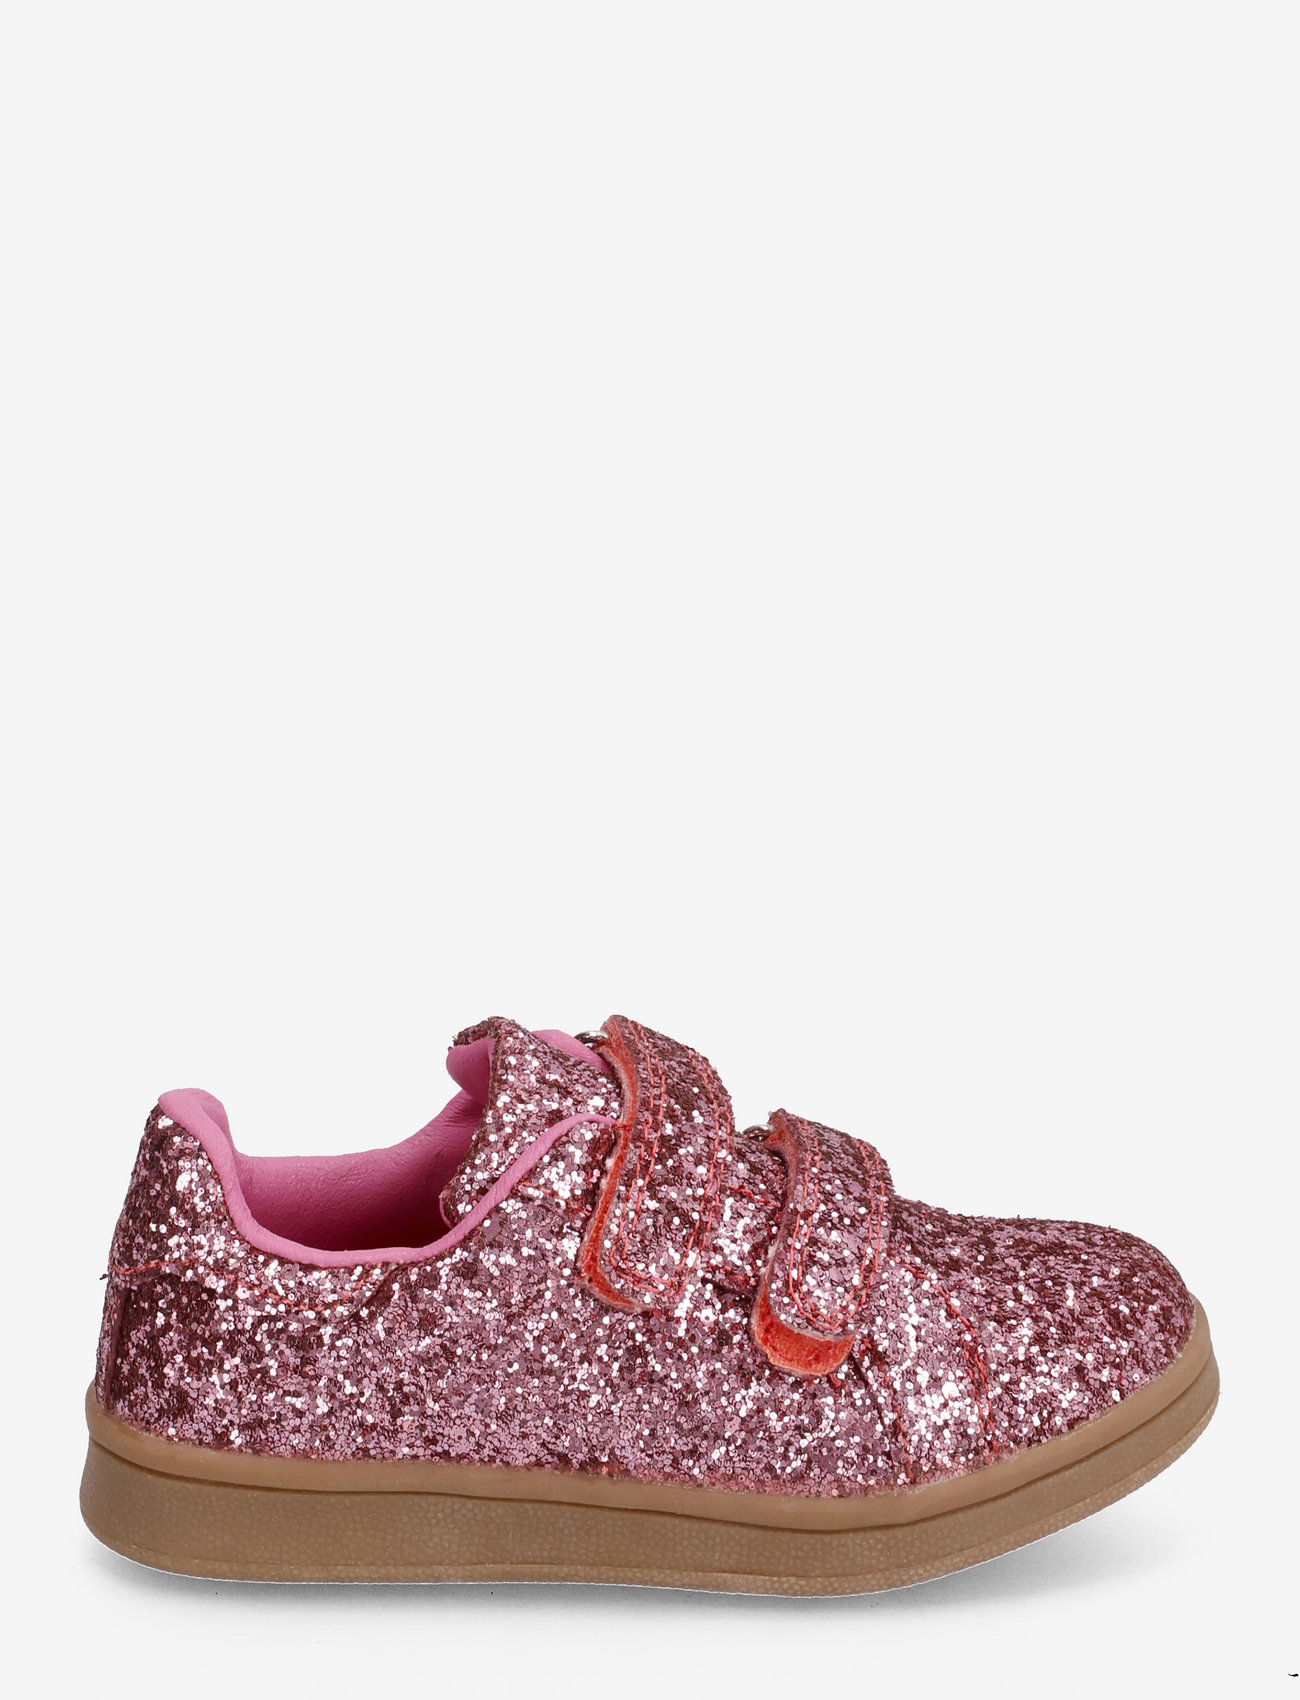 Sofie Schnoor Baby and Kids - Shoe Velcro - coral pink - 1